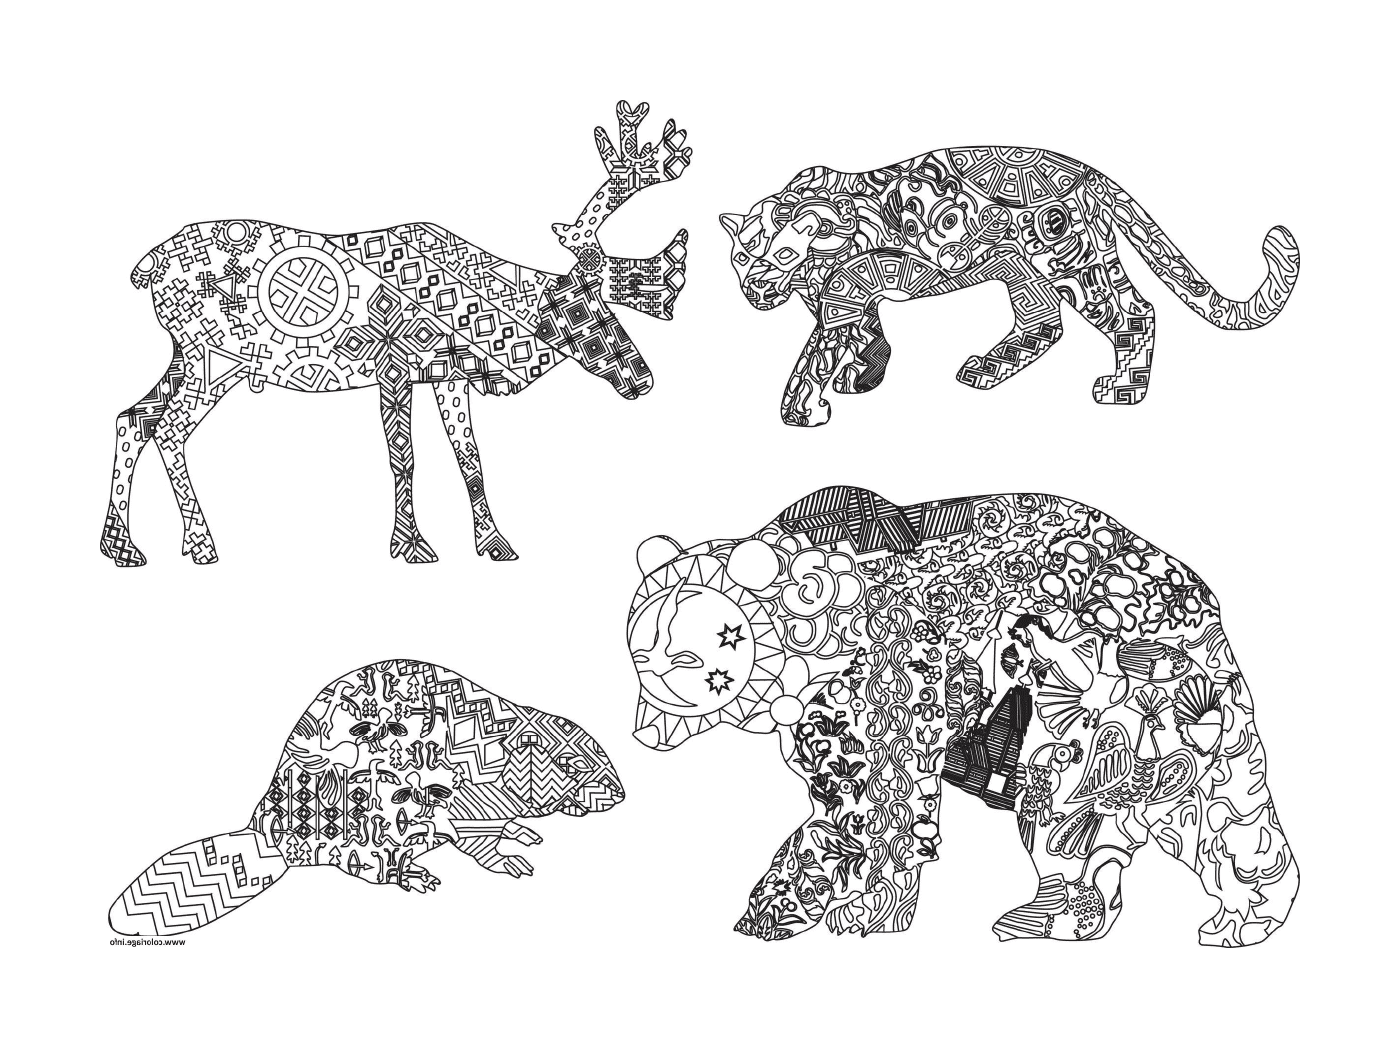  Нарисован набор животных 